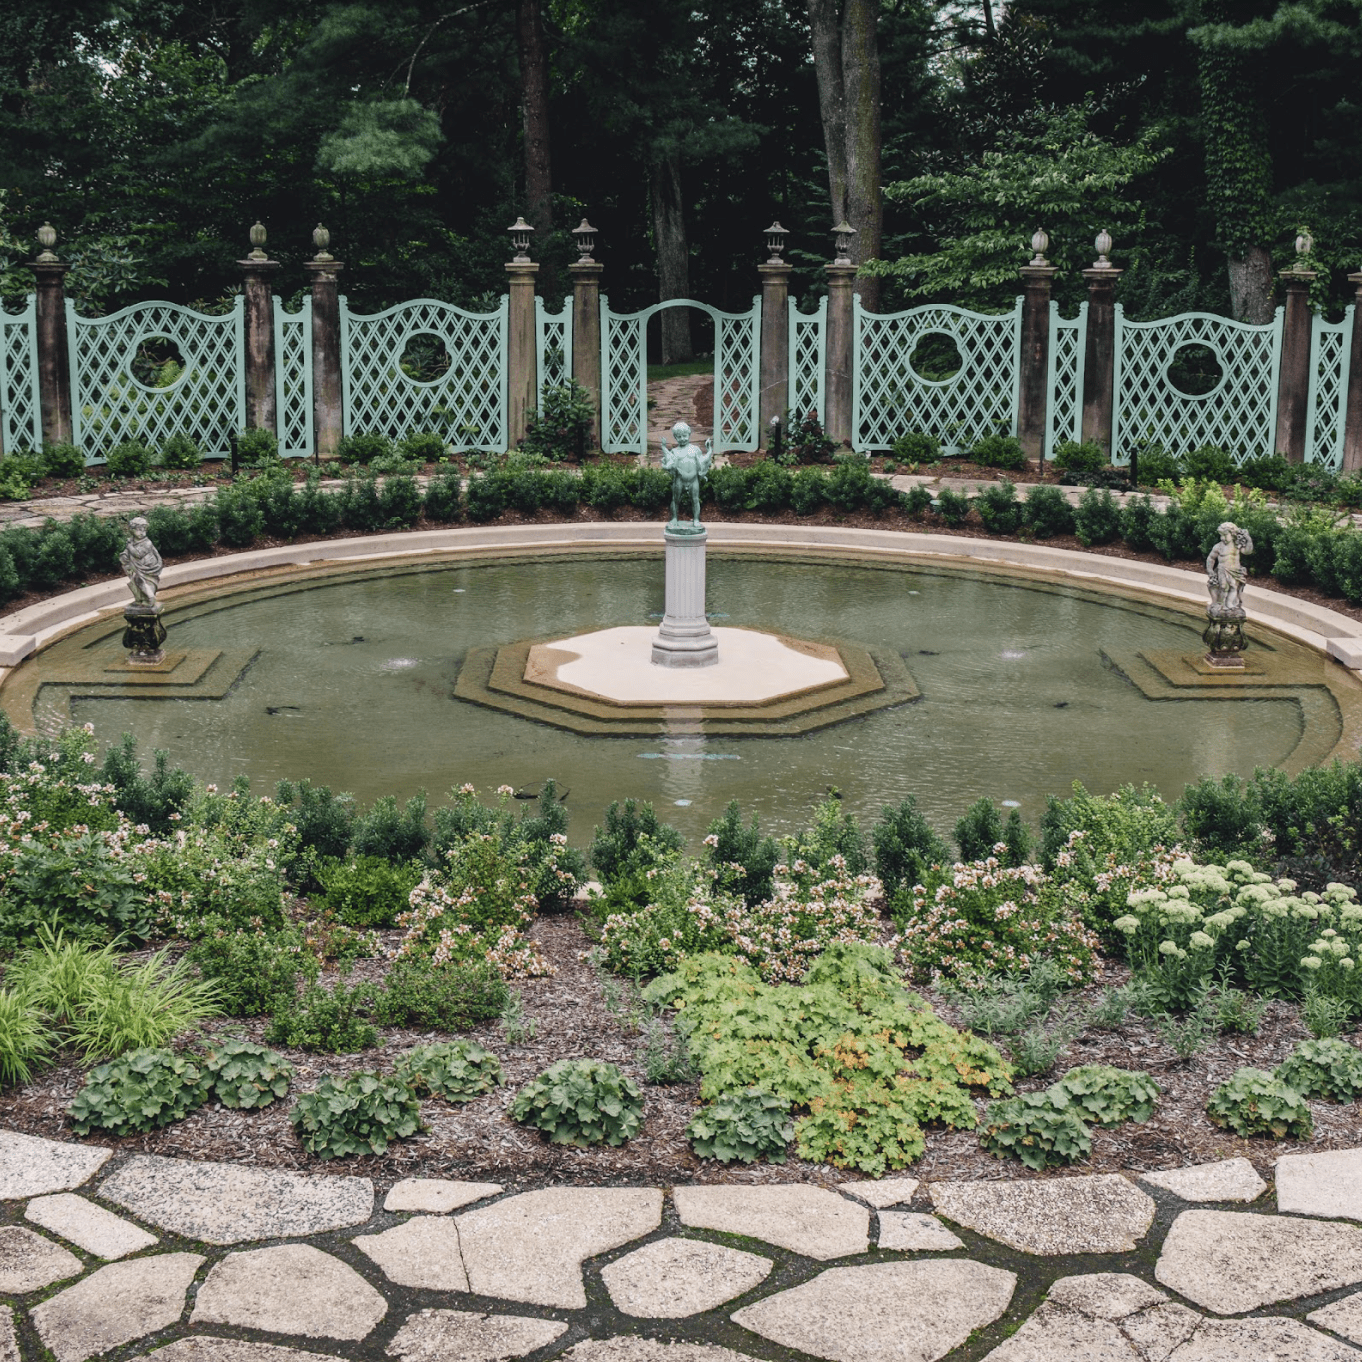 Greenwood Gardens